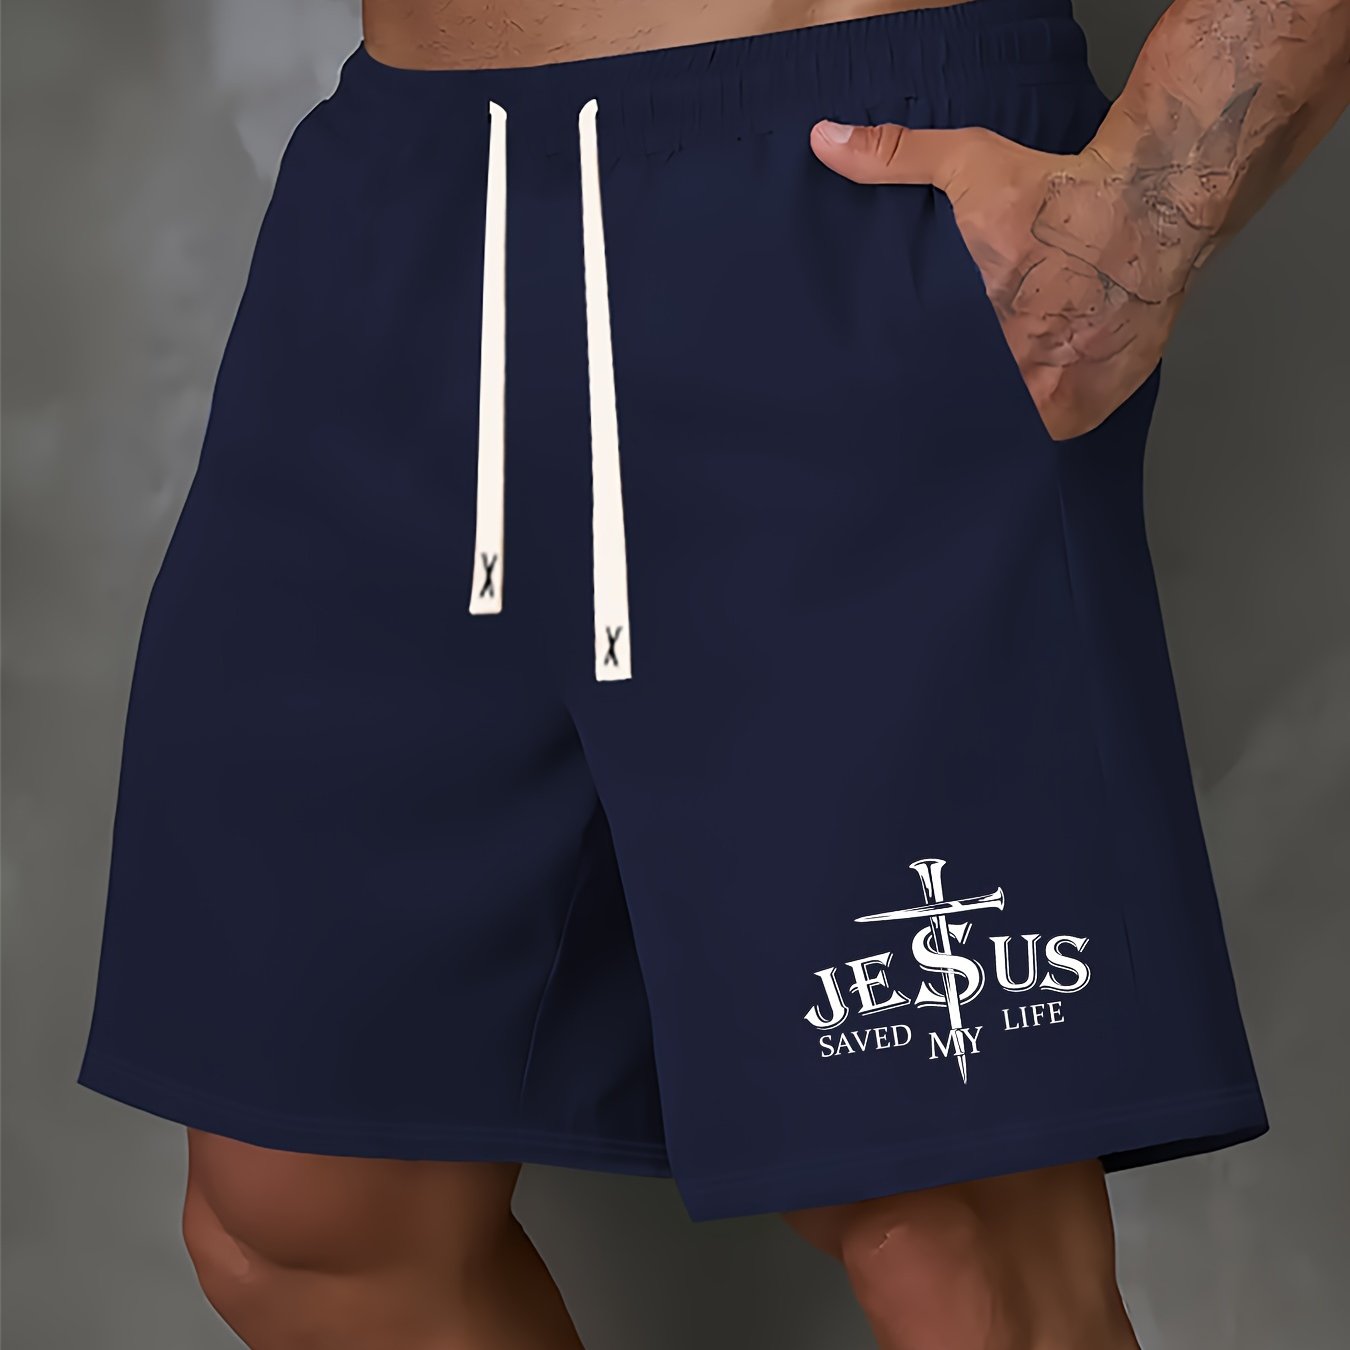 Jesus Saved My Life Men's Christian Shorts claimedbygoddesigns